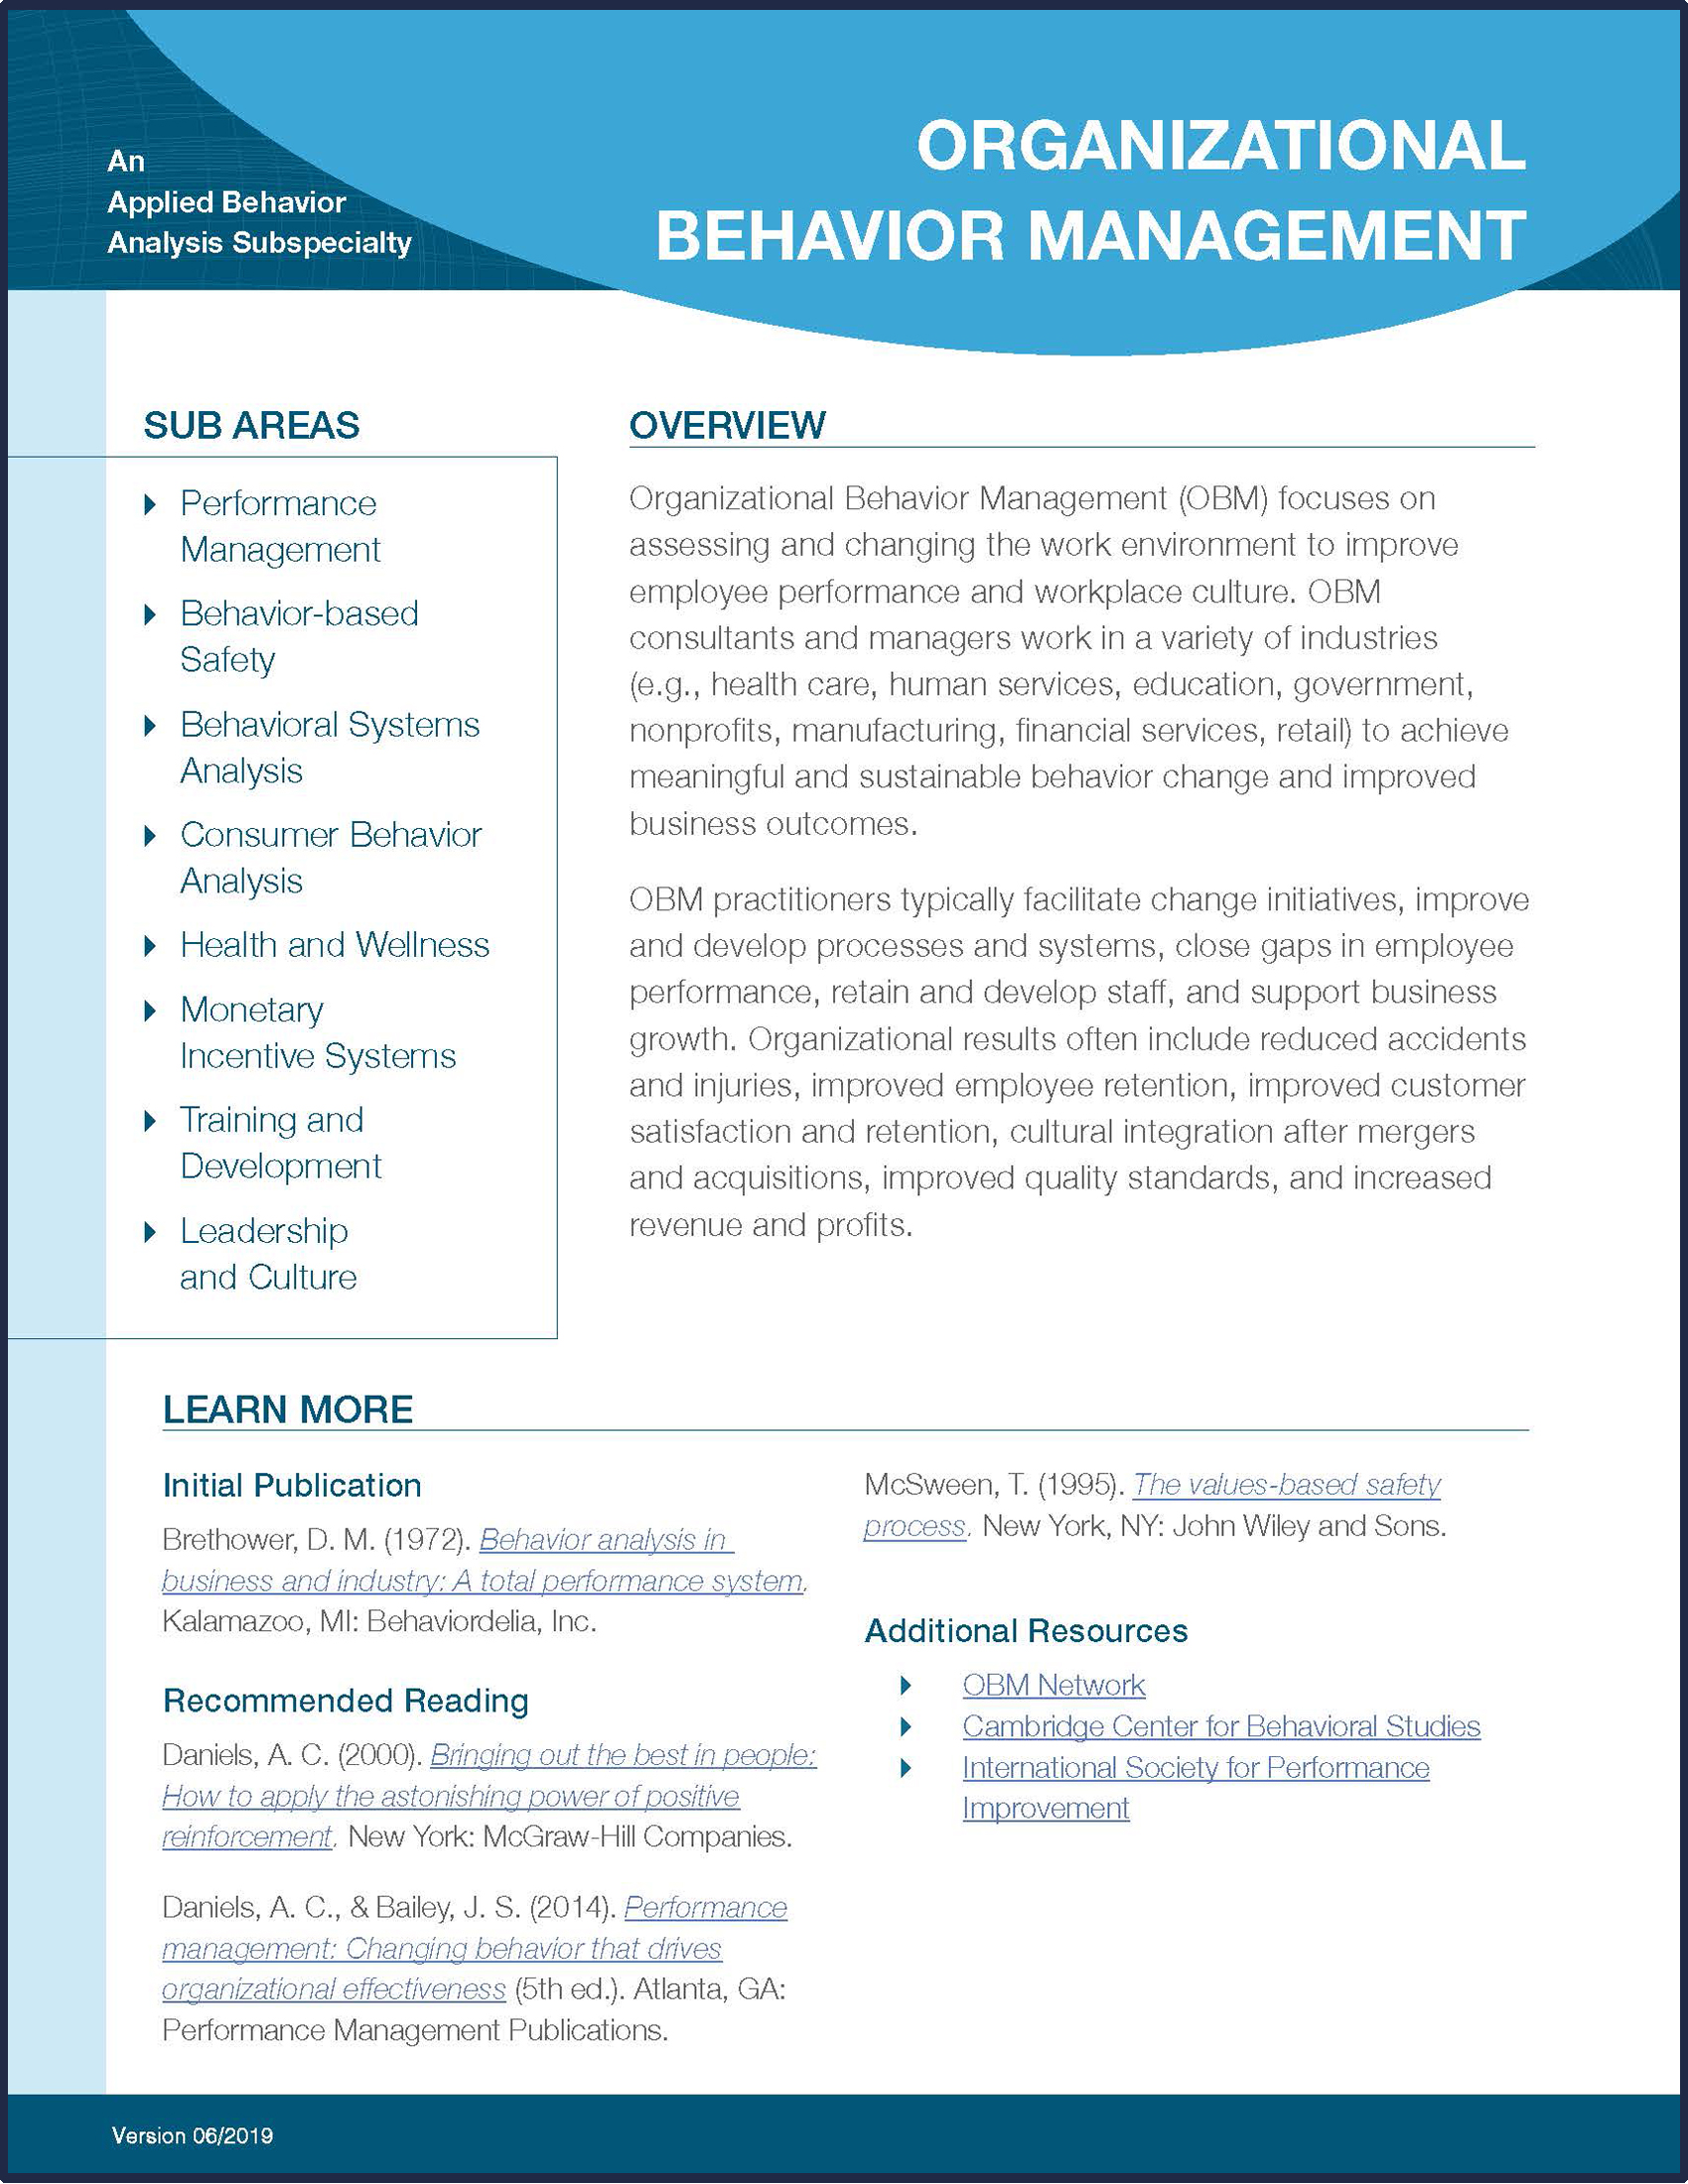 Organizational Behavior Management Subspecialty Fact Sheet thumbnail